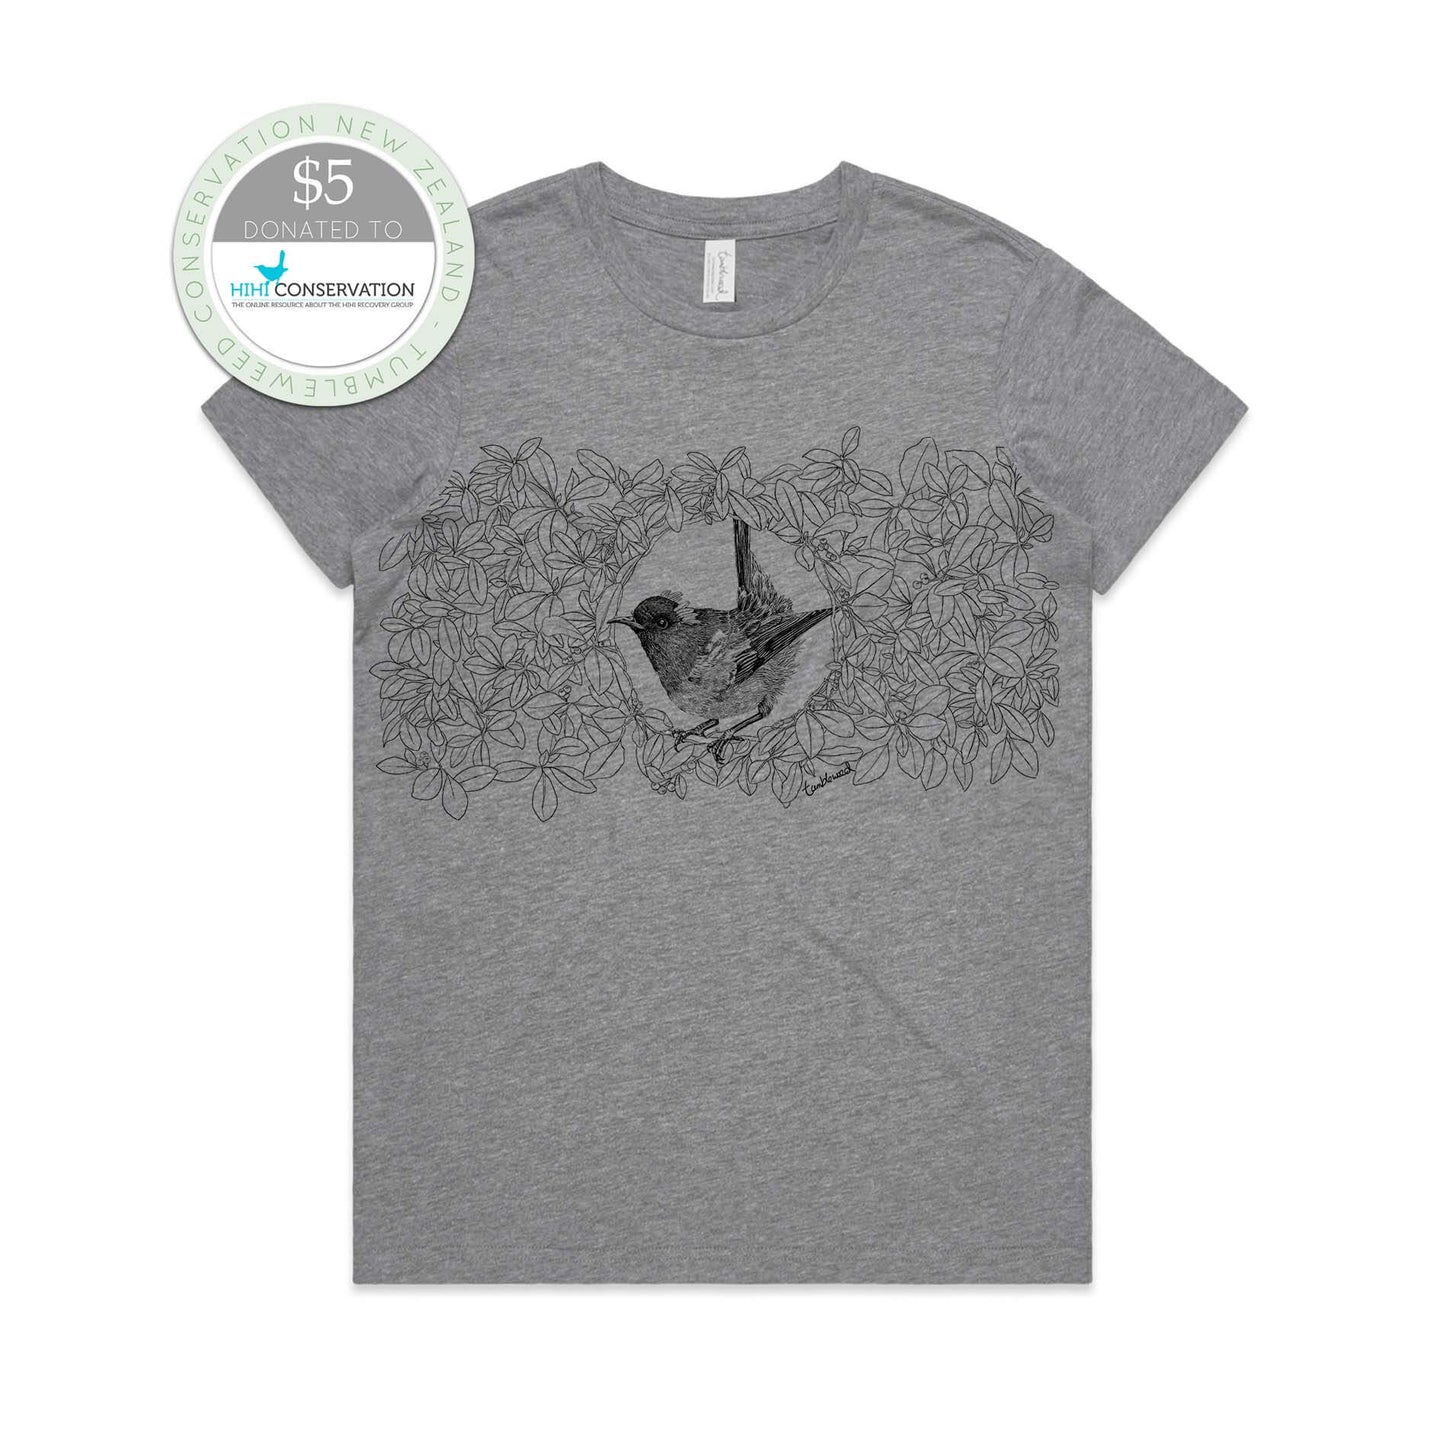 Grey marle, female t-shirt featuring a screen printed Hihi/Stitchbird design.